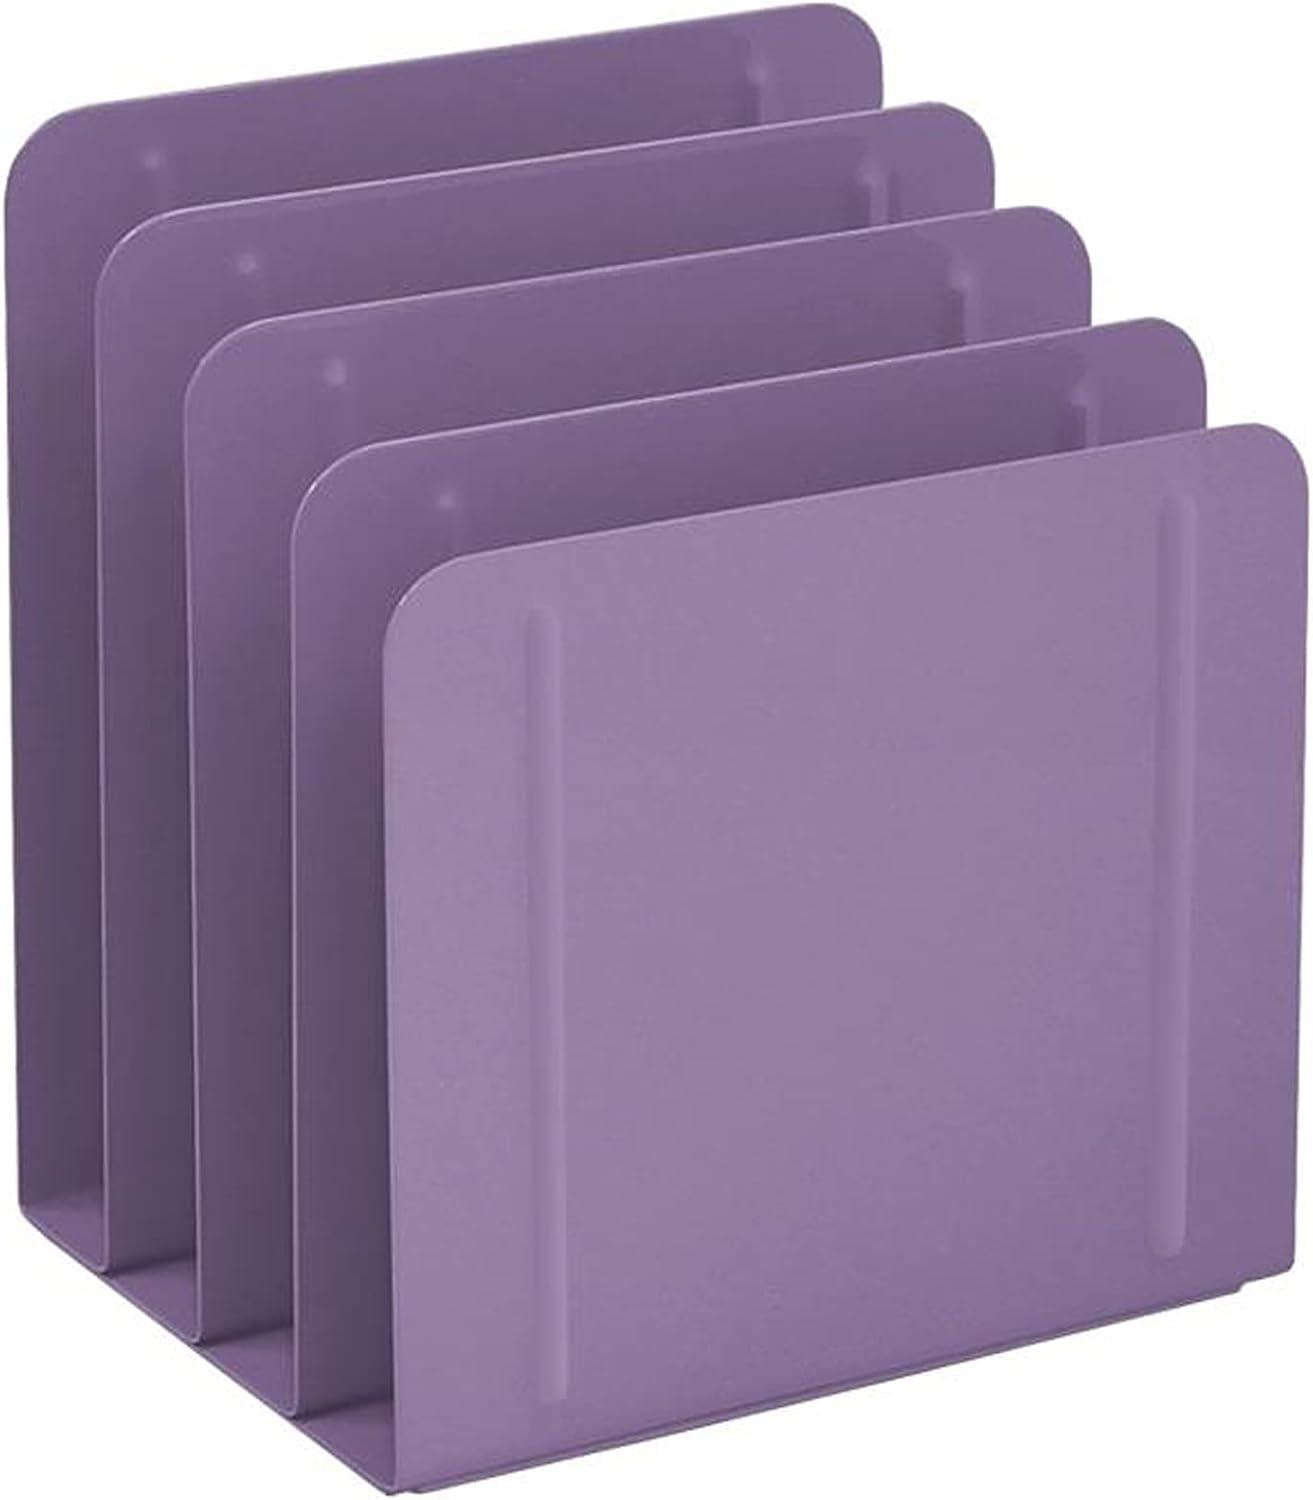 acrimet desk metal file sorter organizer 4 sections office and home file management solution purple color 